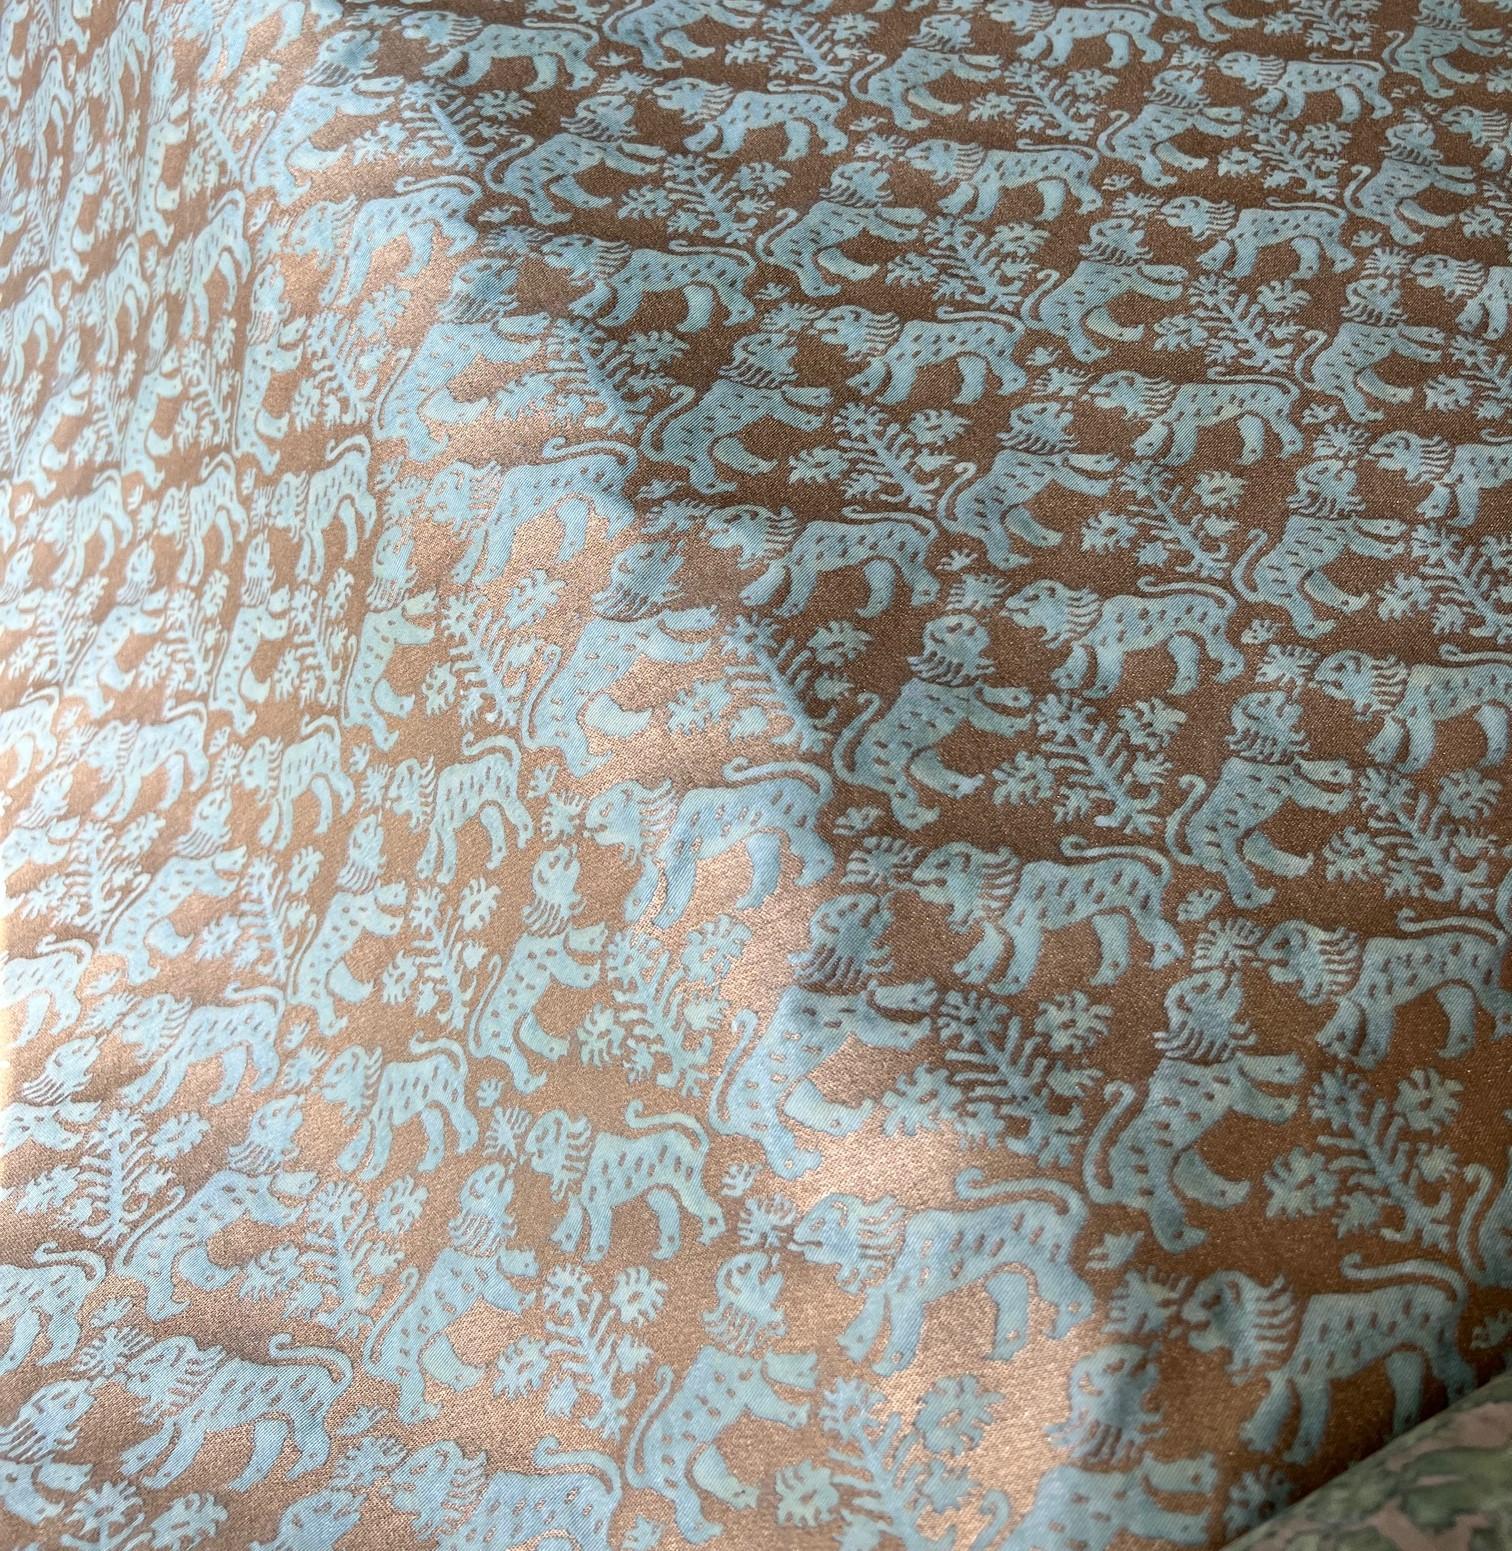 Modern Venetian Fortuny Richilieu Fabric in Aquamarine and Silvery Gold, 2.4 Yards